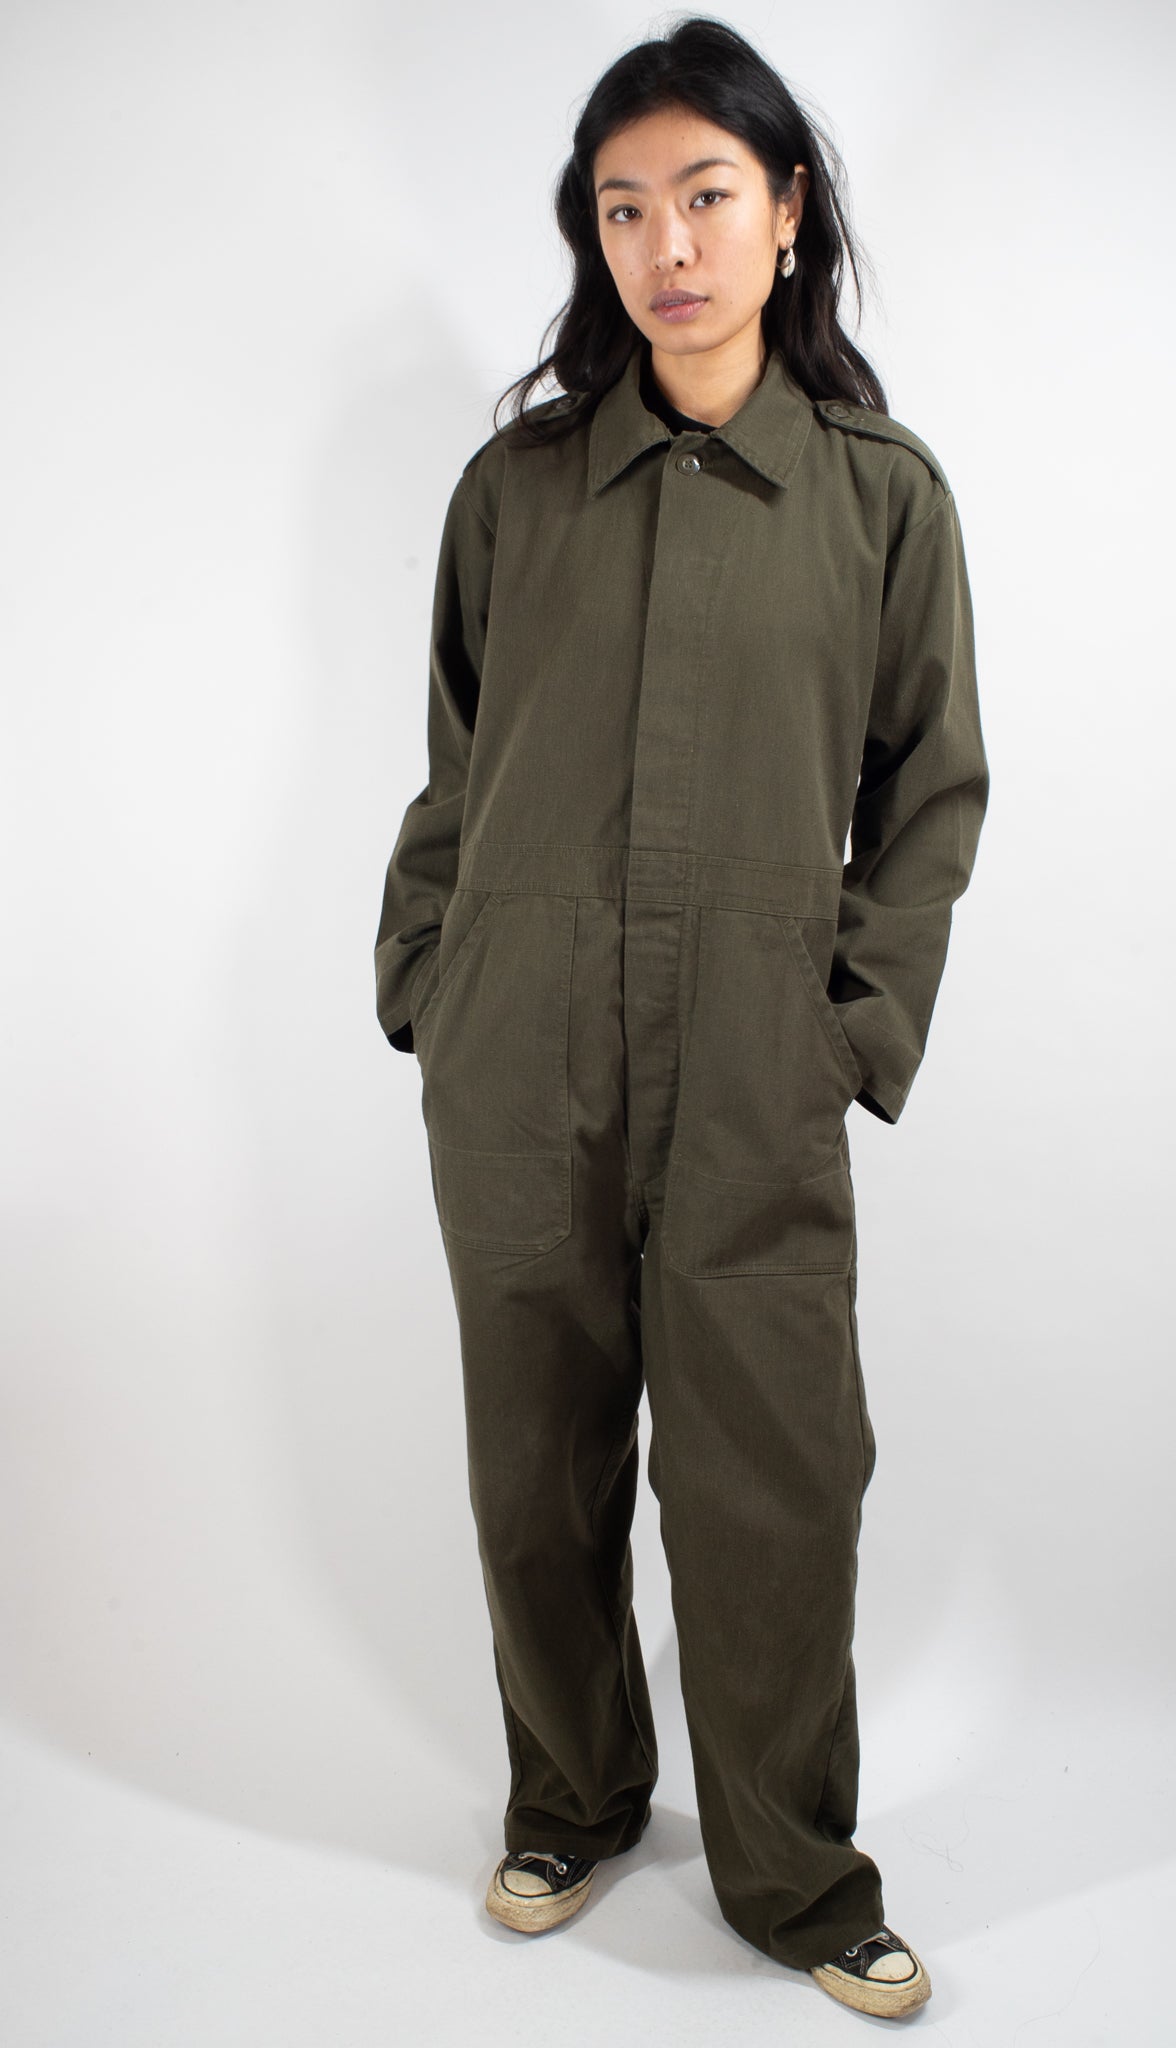 Dutch Army Olive Green Overalls - Jumpsuit - Grade 1 - Forces Uniform ...